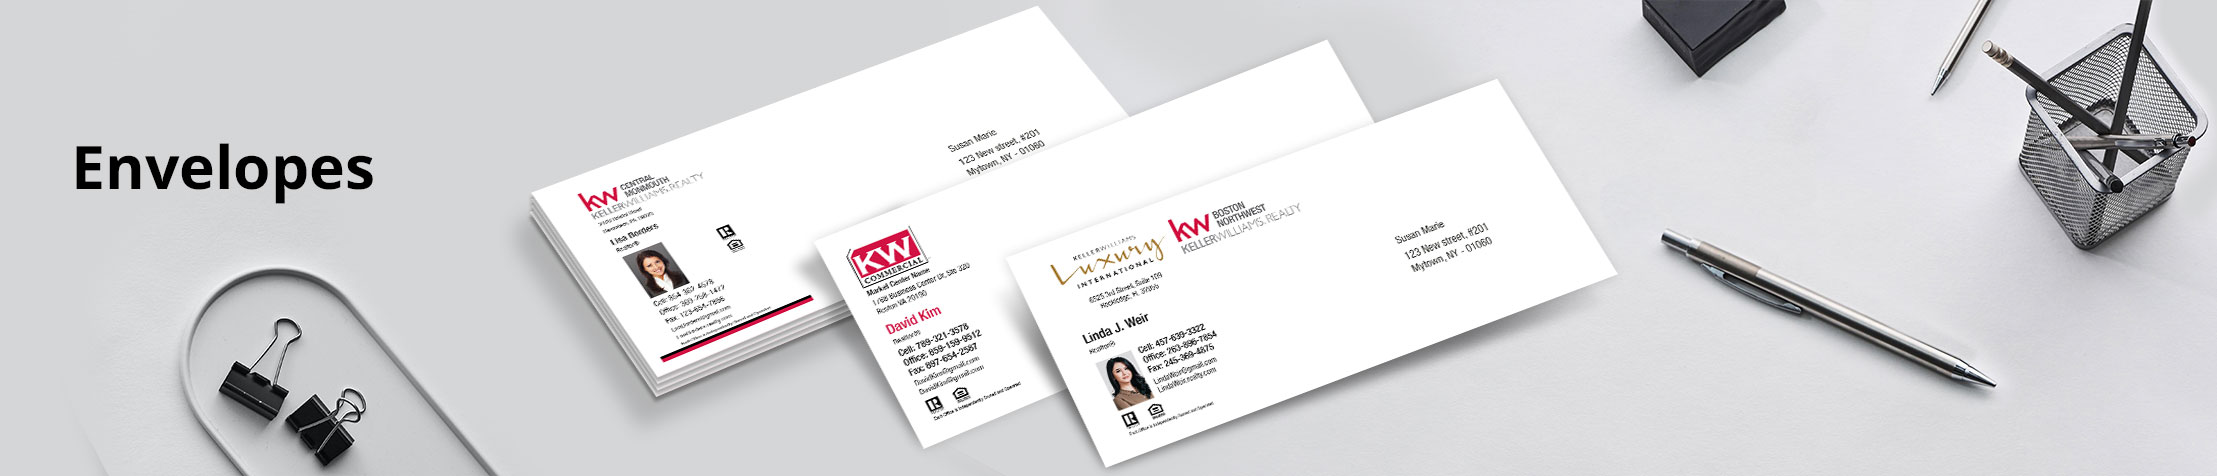 Keller Williams Real Estate #10 Envelopes - KW Approved Vendor - Custom Stationery Templates for KW Offices and Real Estate Agents | BestPrintBuy.com